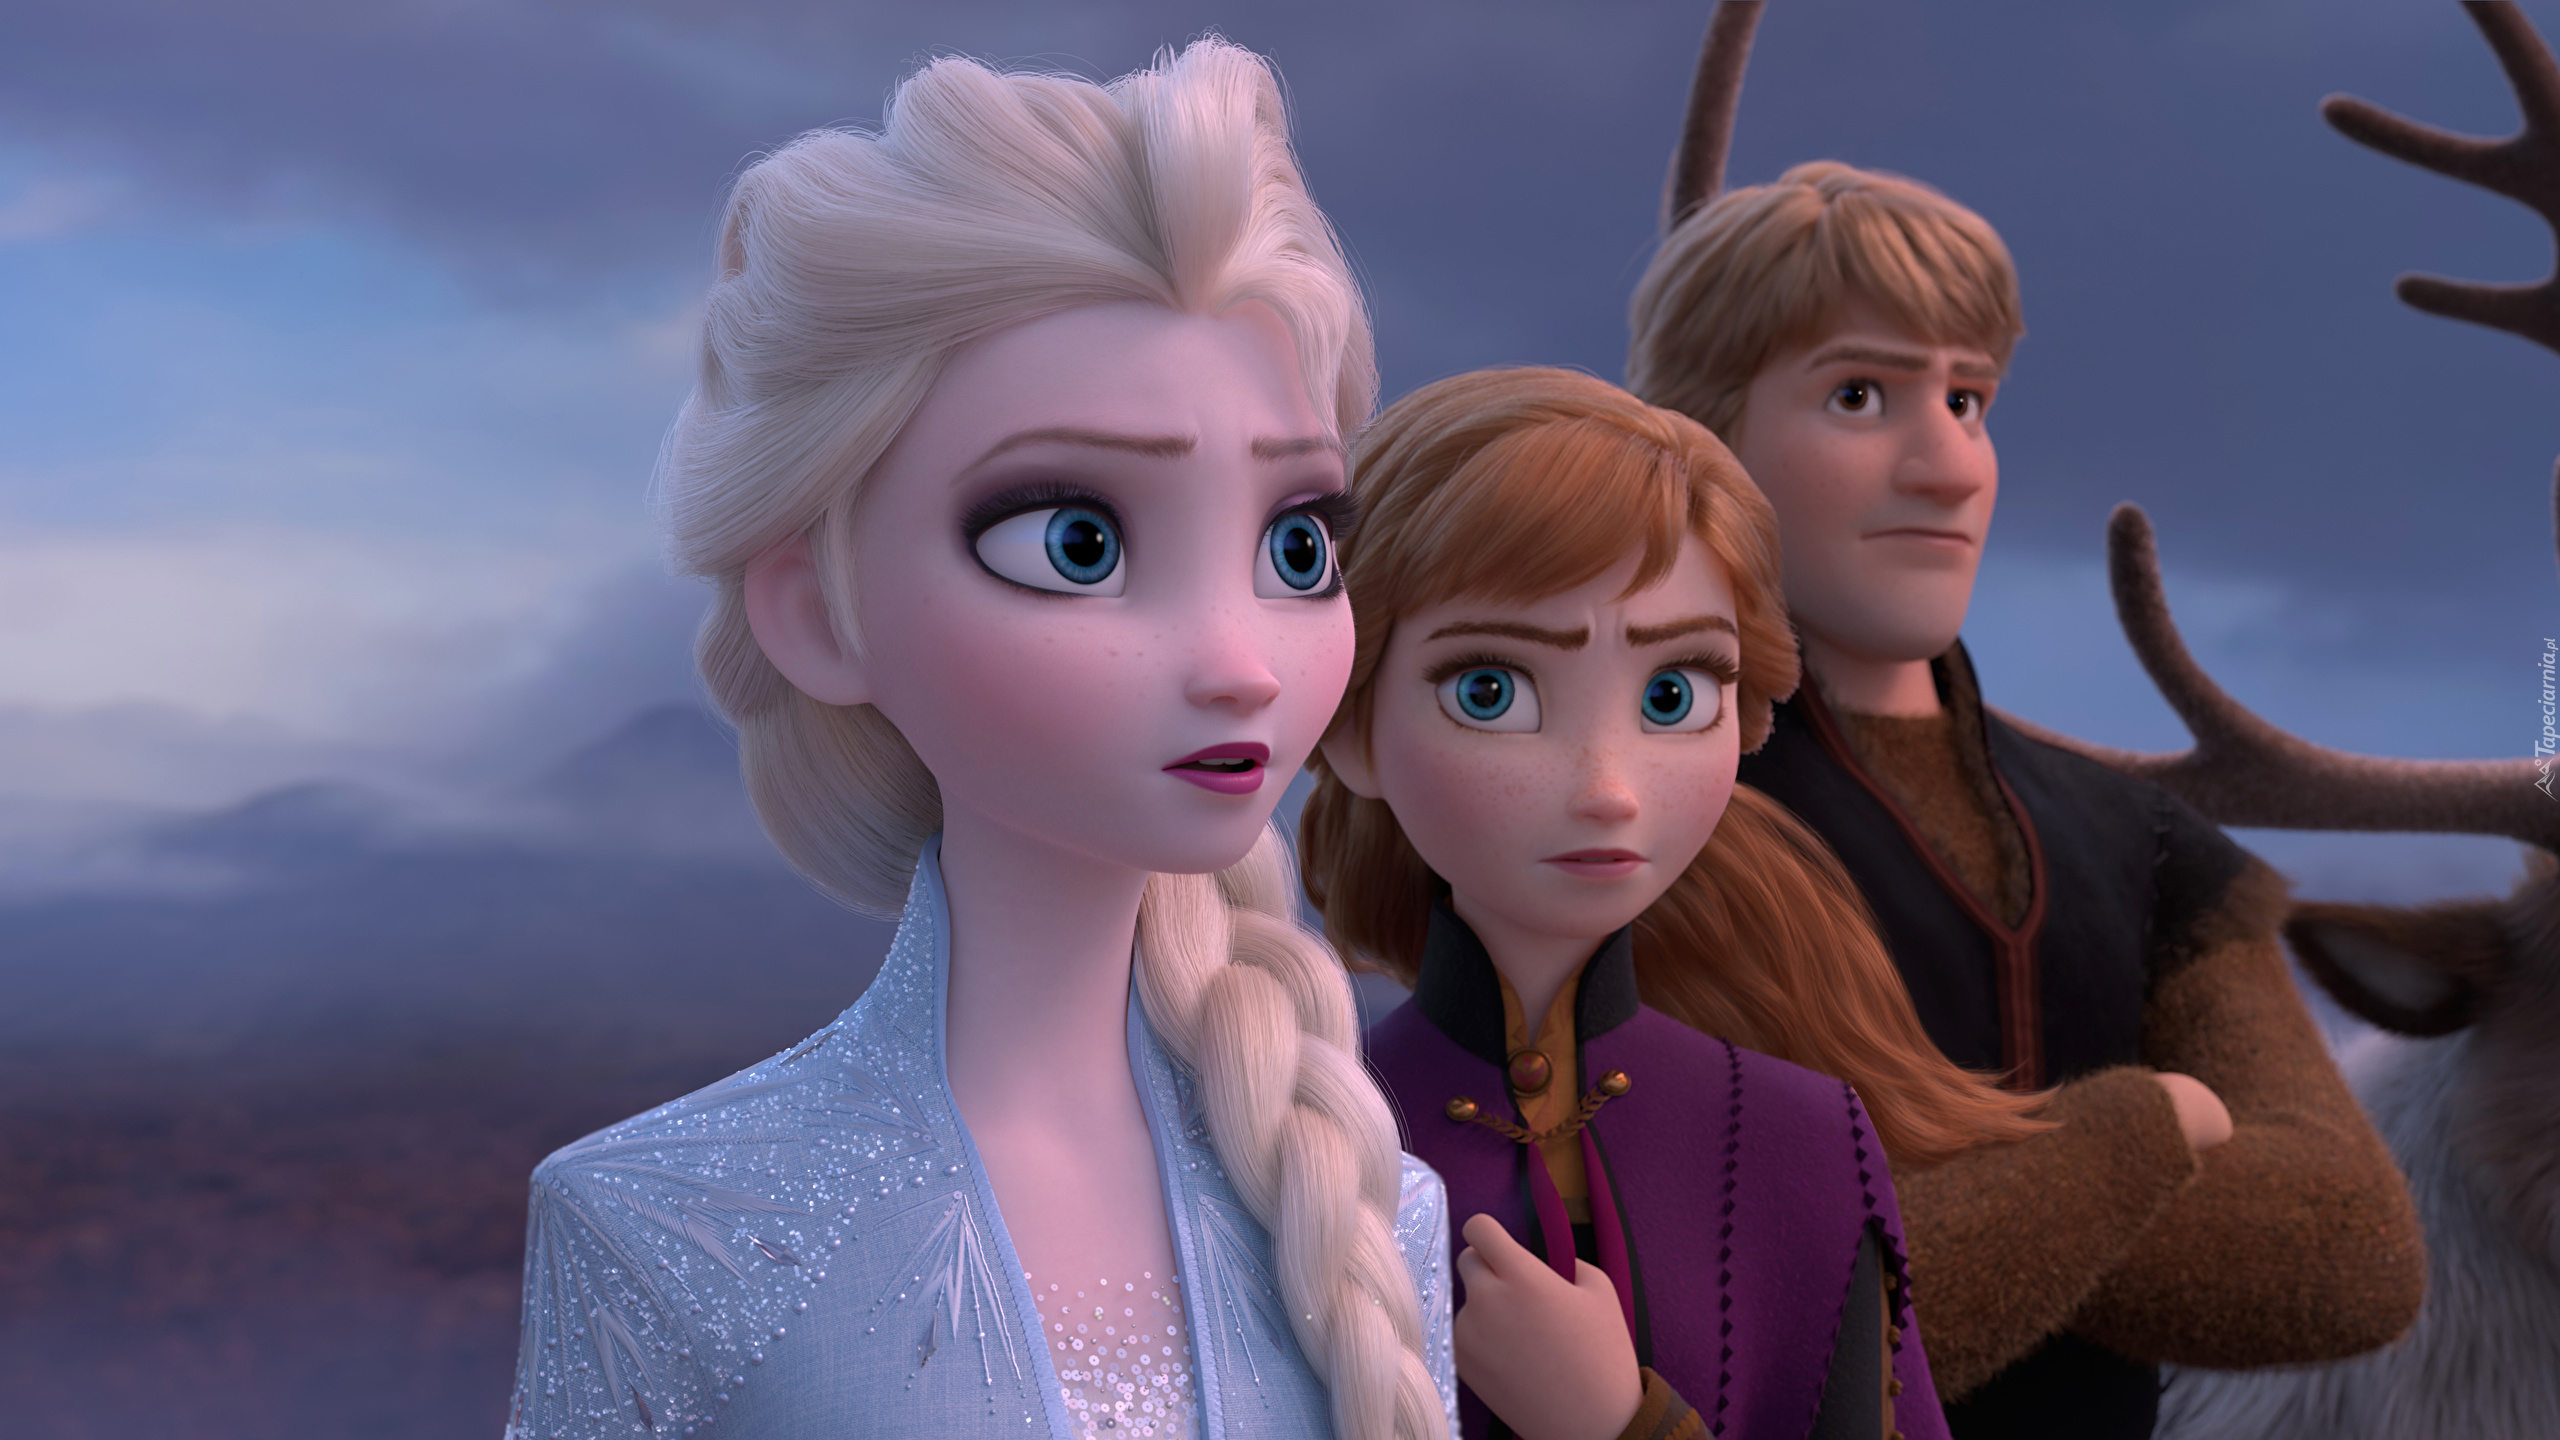 Film animowany, Kraina lodu, Frozen, Elsa, Anna, Kristoff